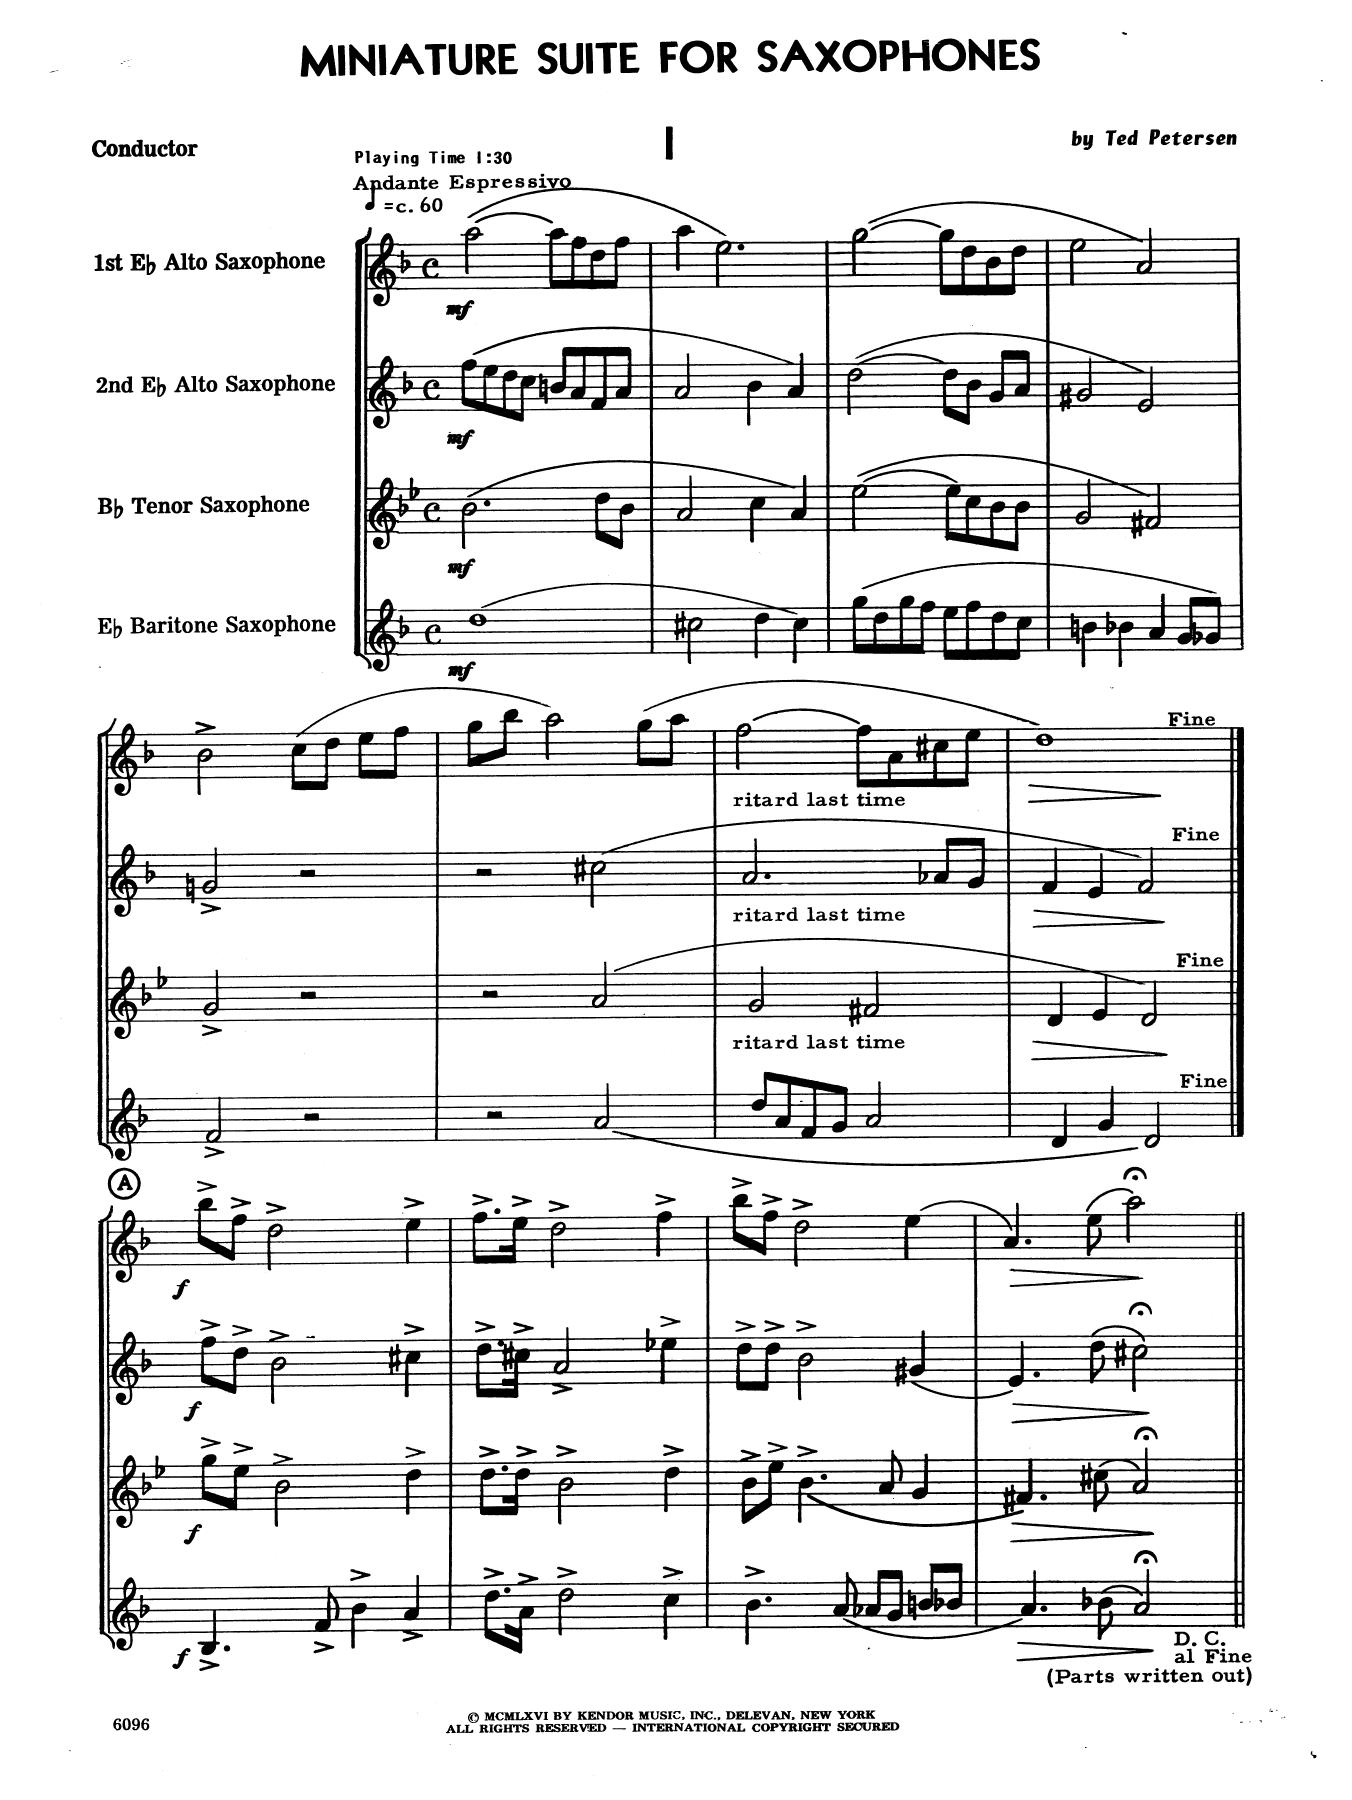 Download Ted Petersen Miniature Suite for Saxophones - Full S Sheet Music